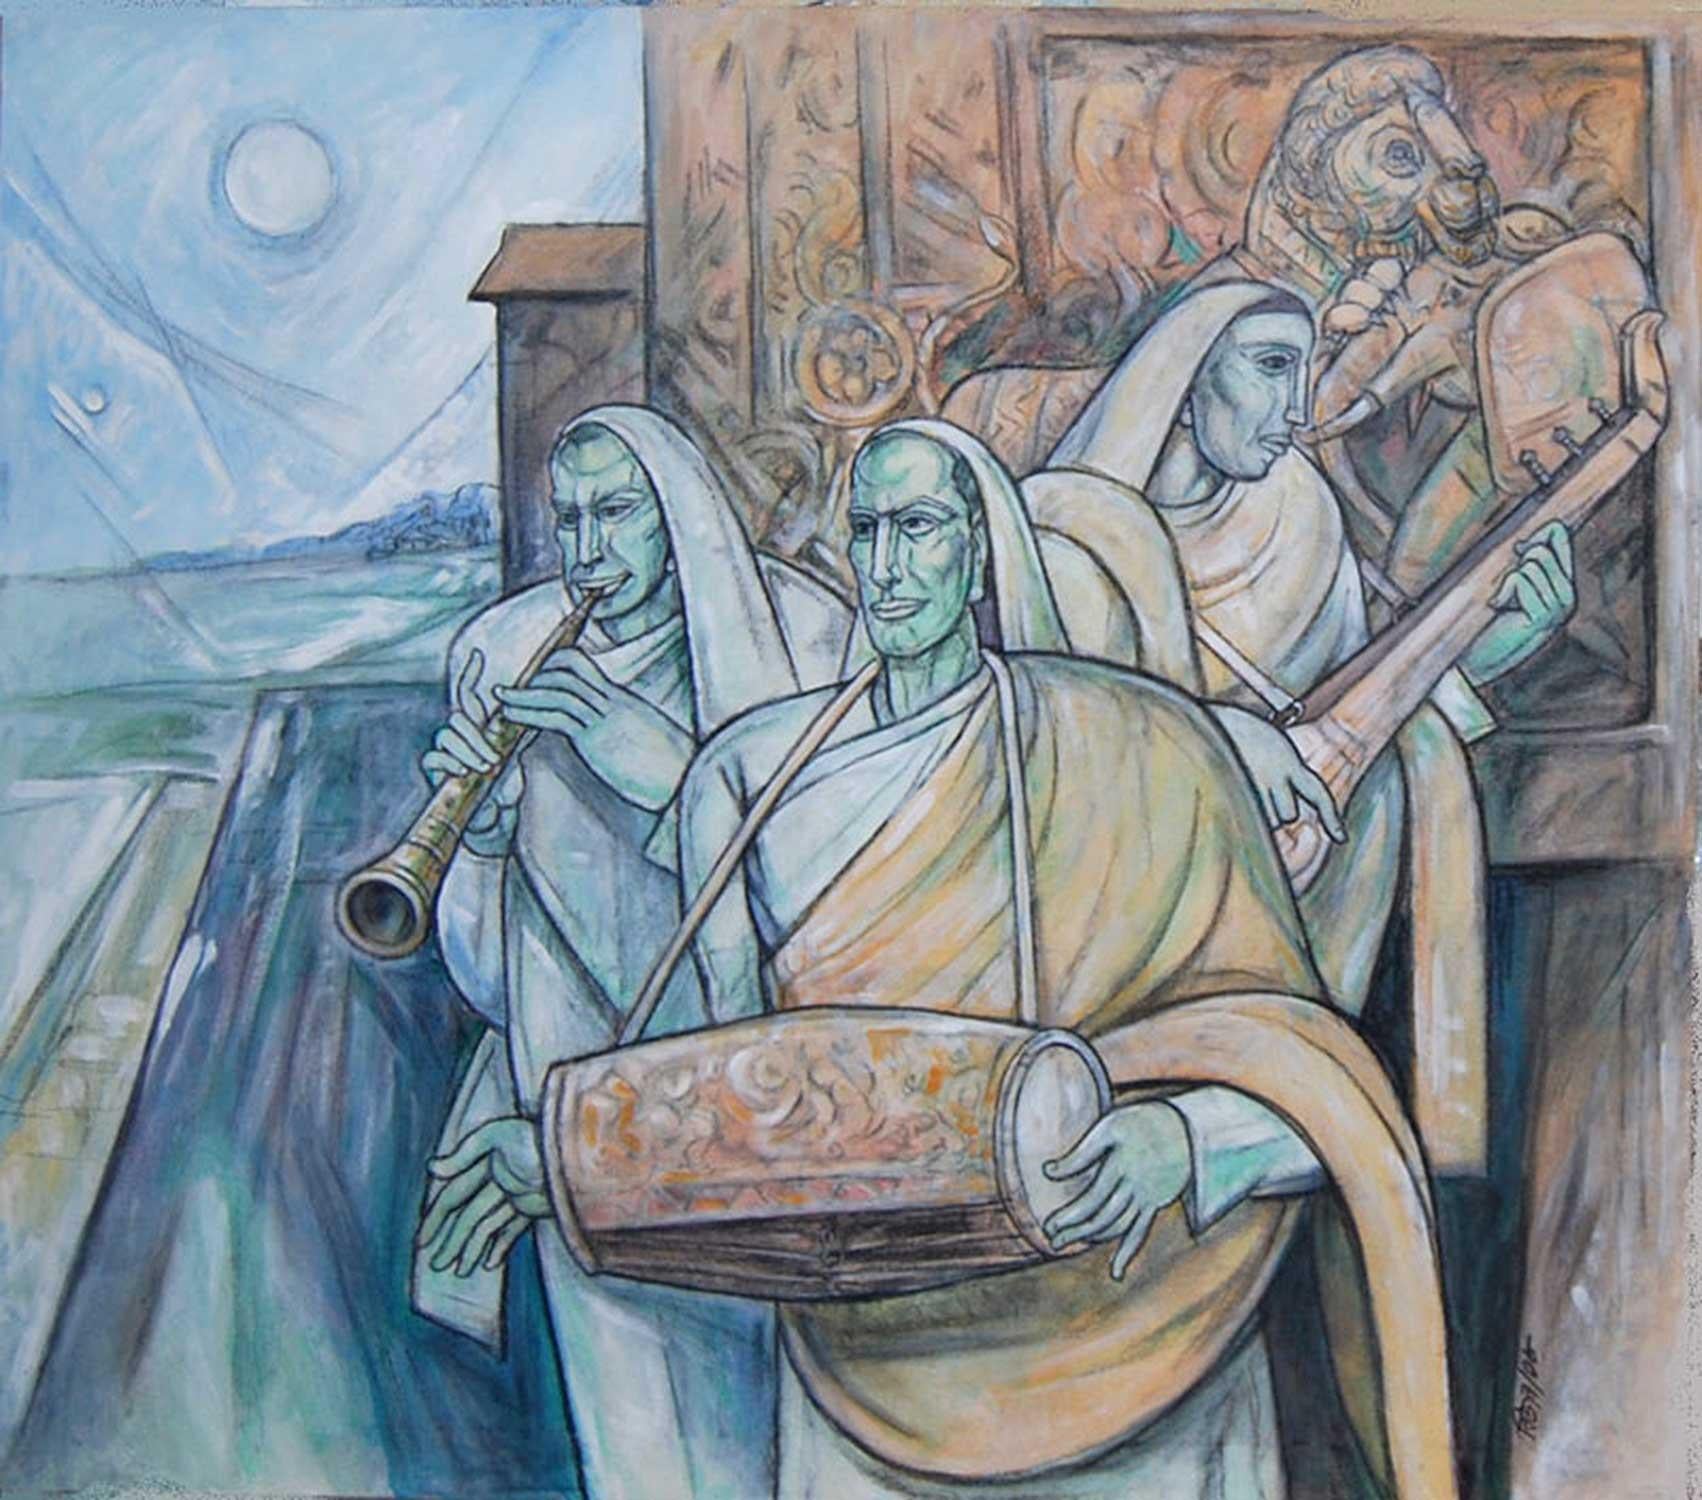 Bijan Choudhury Figurative Painting - Ragh Darbari Kanada, Mixed Media on canvas, Blue by Indian Artist "In Stock"